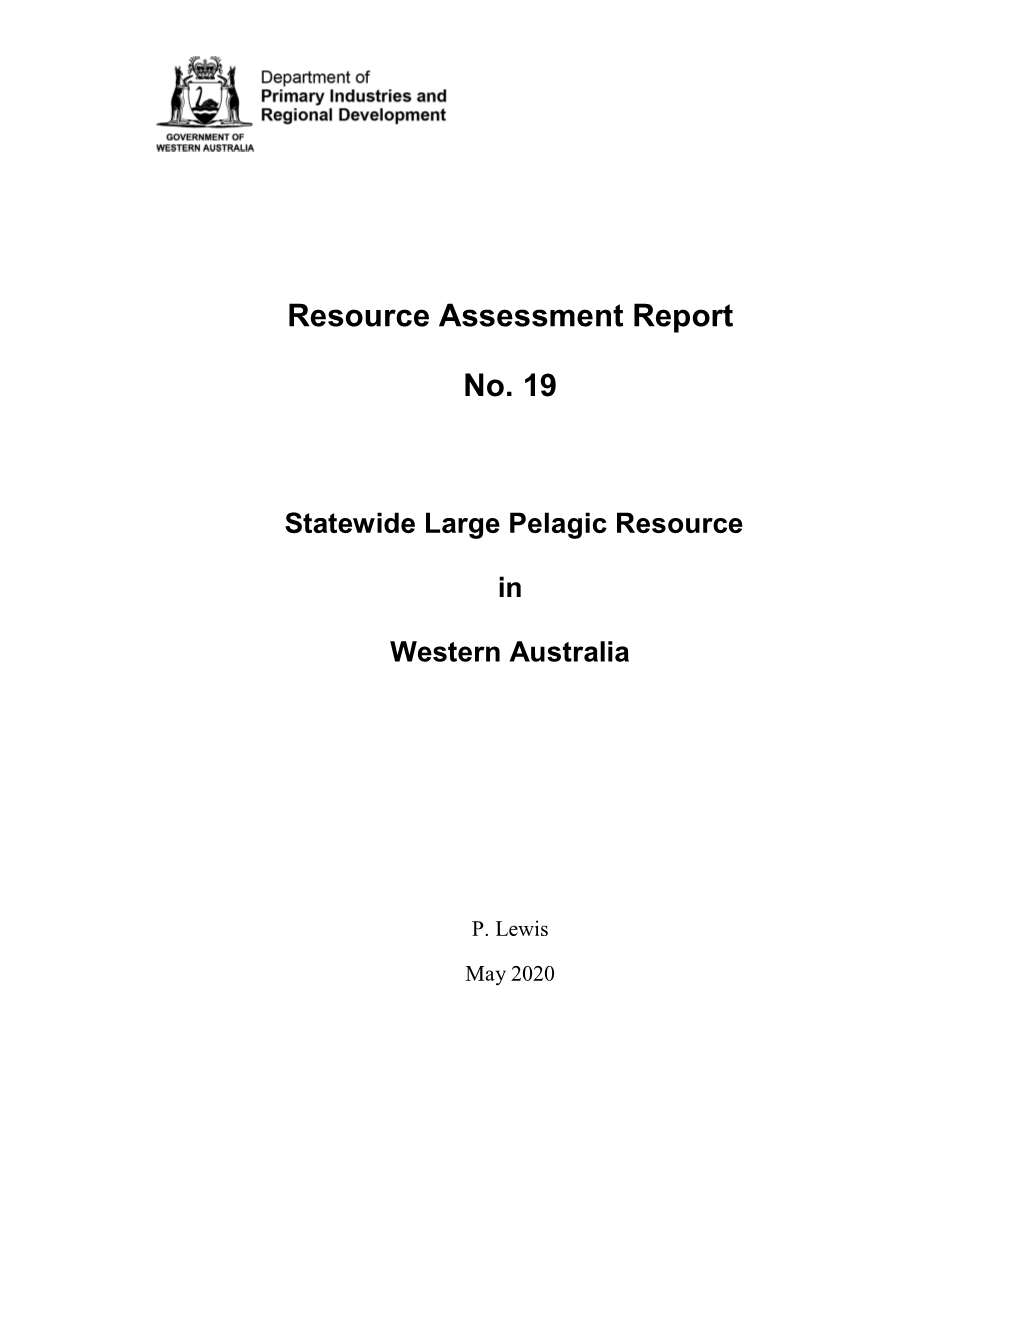 Resource Assessment Report No. 19